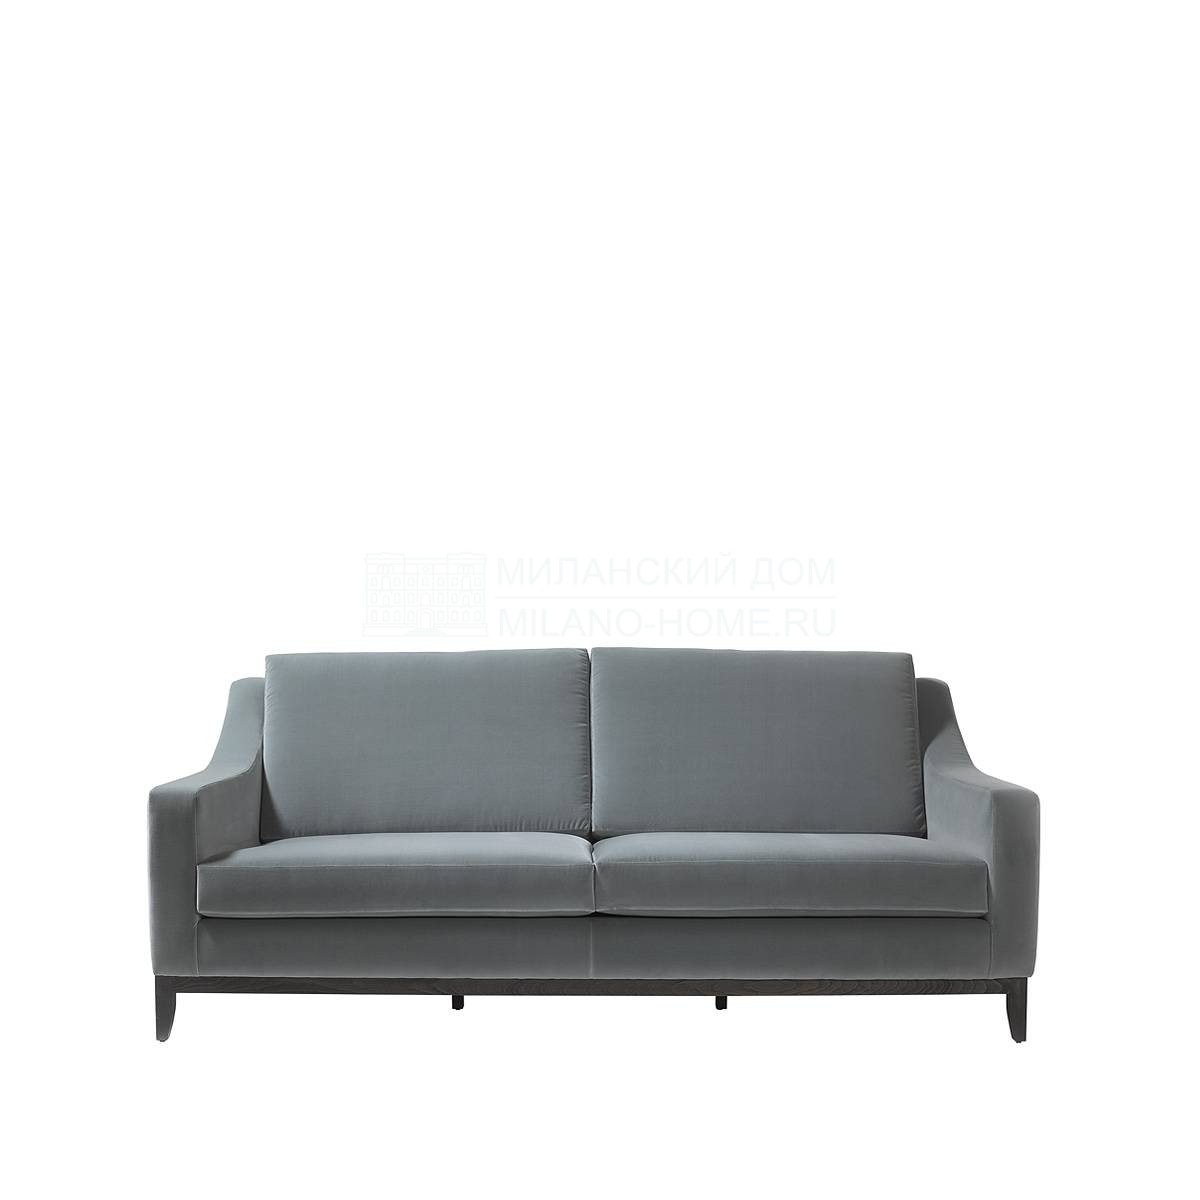 Прямой диван Orleans sofa из Испании фабрики COLECCION ALEXANDRA